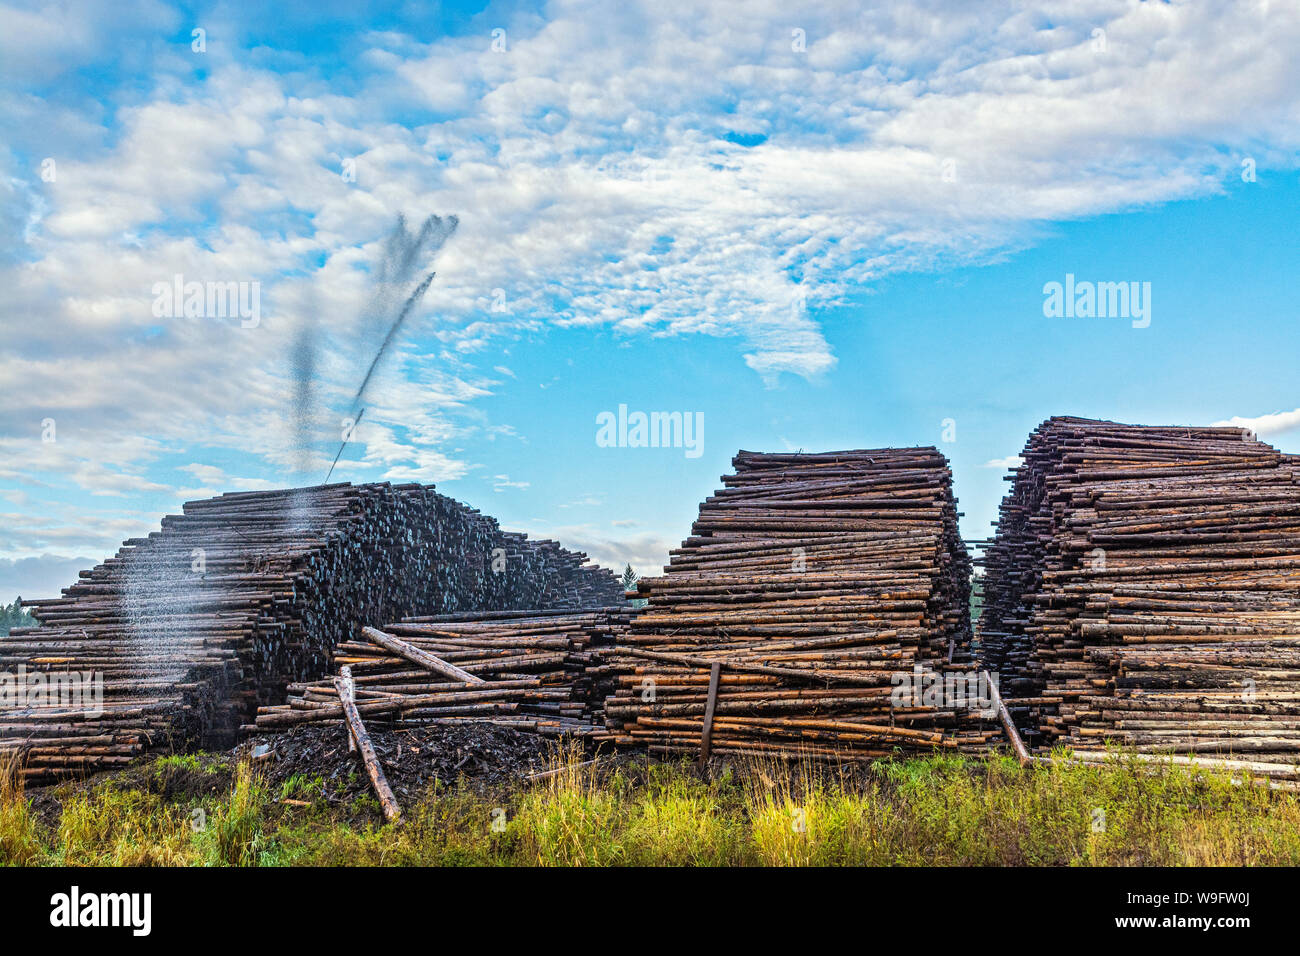 Stimson Lumber Mill, Plummer, Idaho, sprinklers wetting logs prior to milling Stock Photo